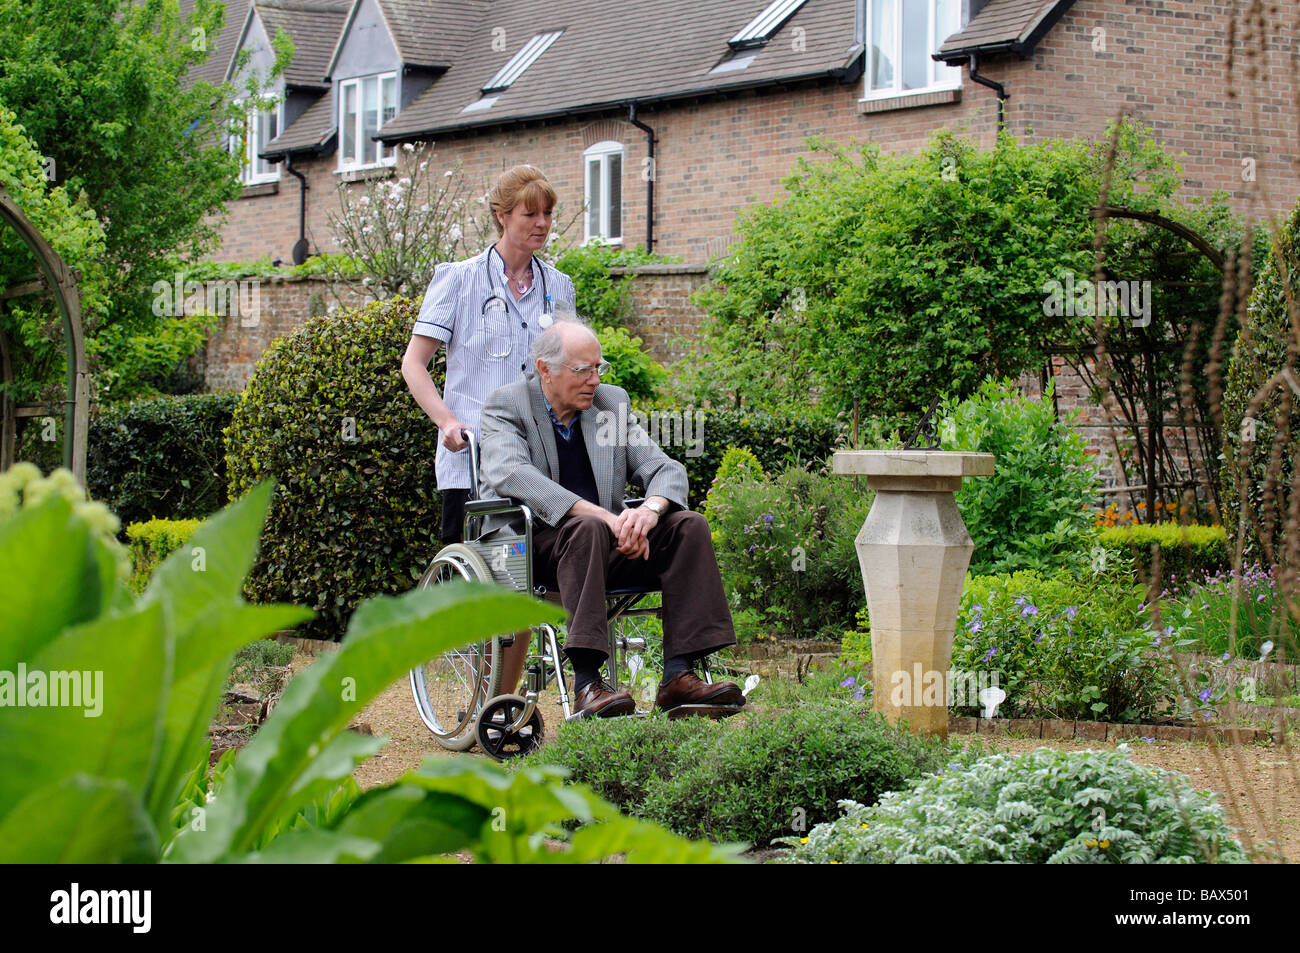 Nurse pushing a male patient in a wheelchair through a delightful garden Stock Photo